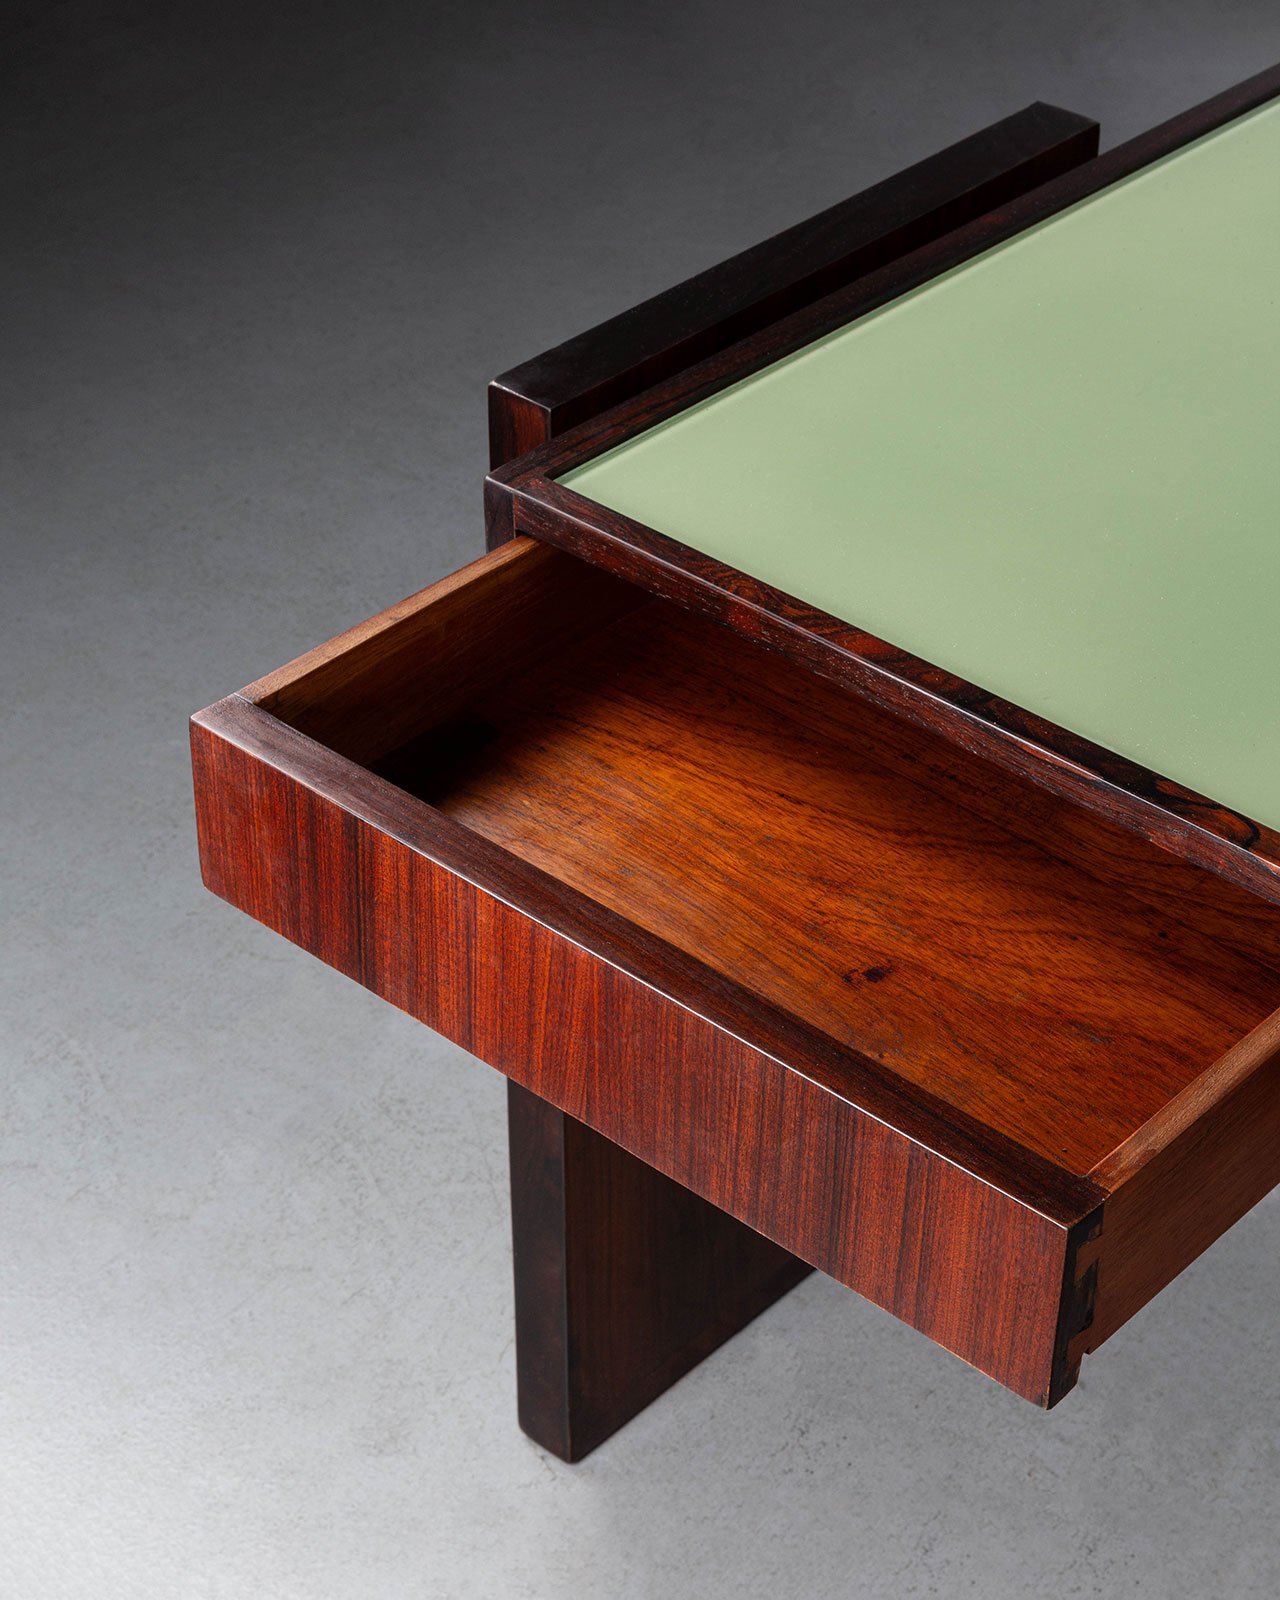 Desk by Joaquim Tenreiro. Photography © Carpenters Workshop Gallery.